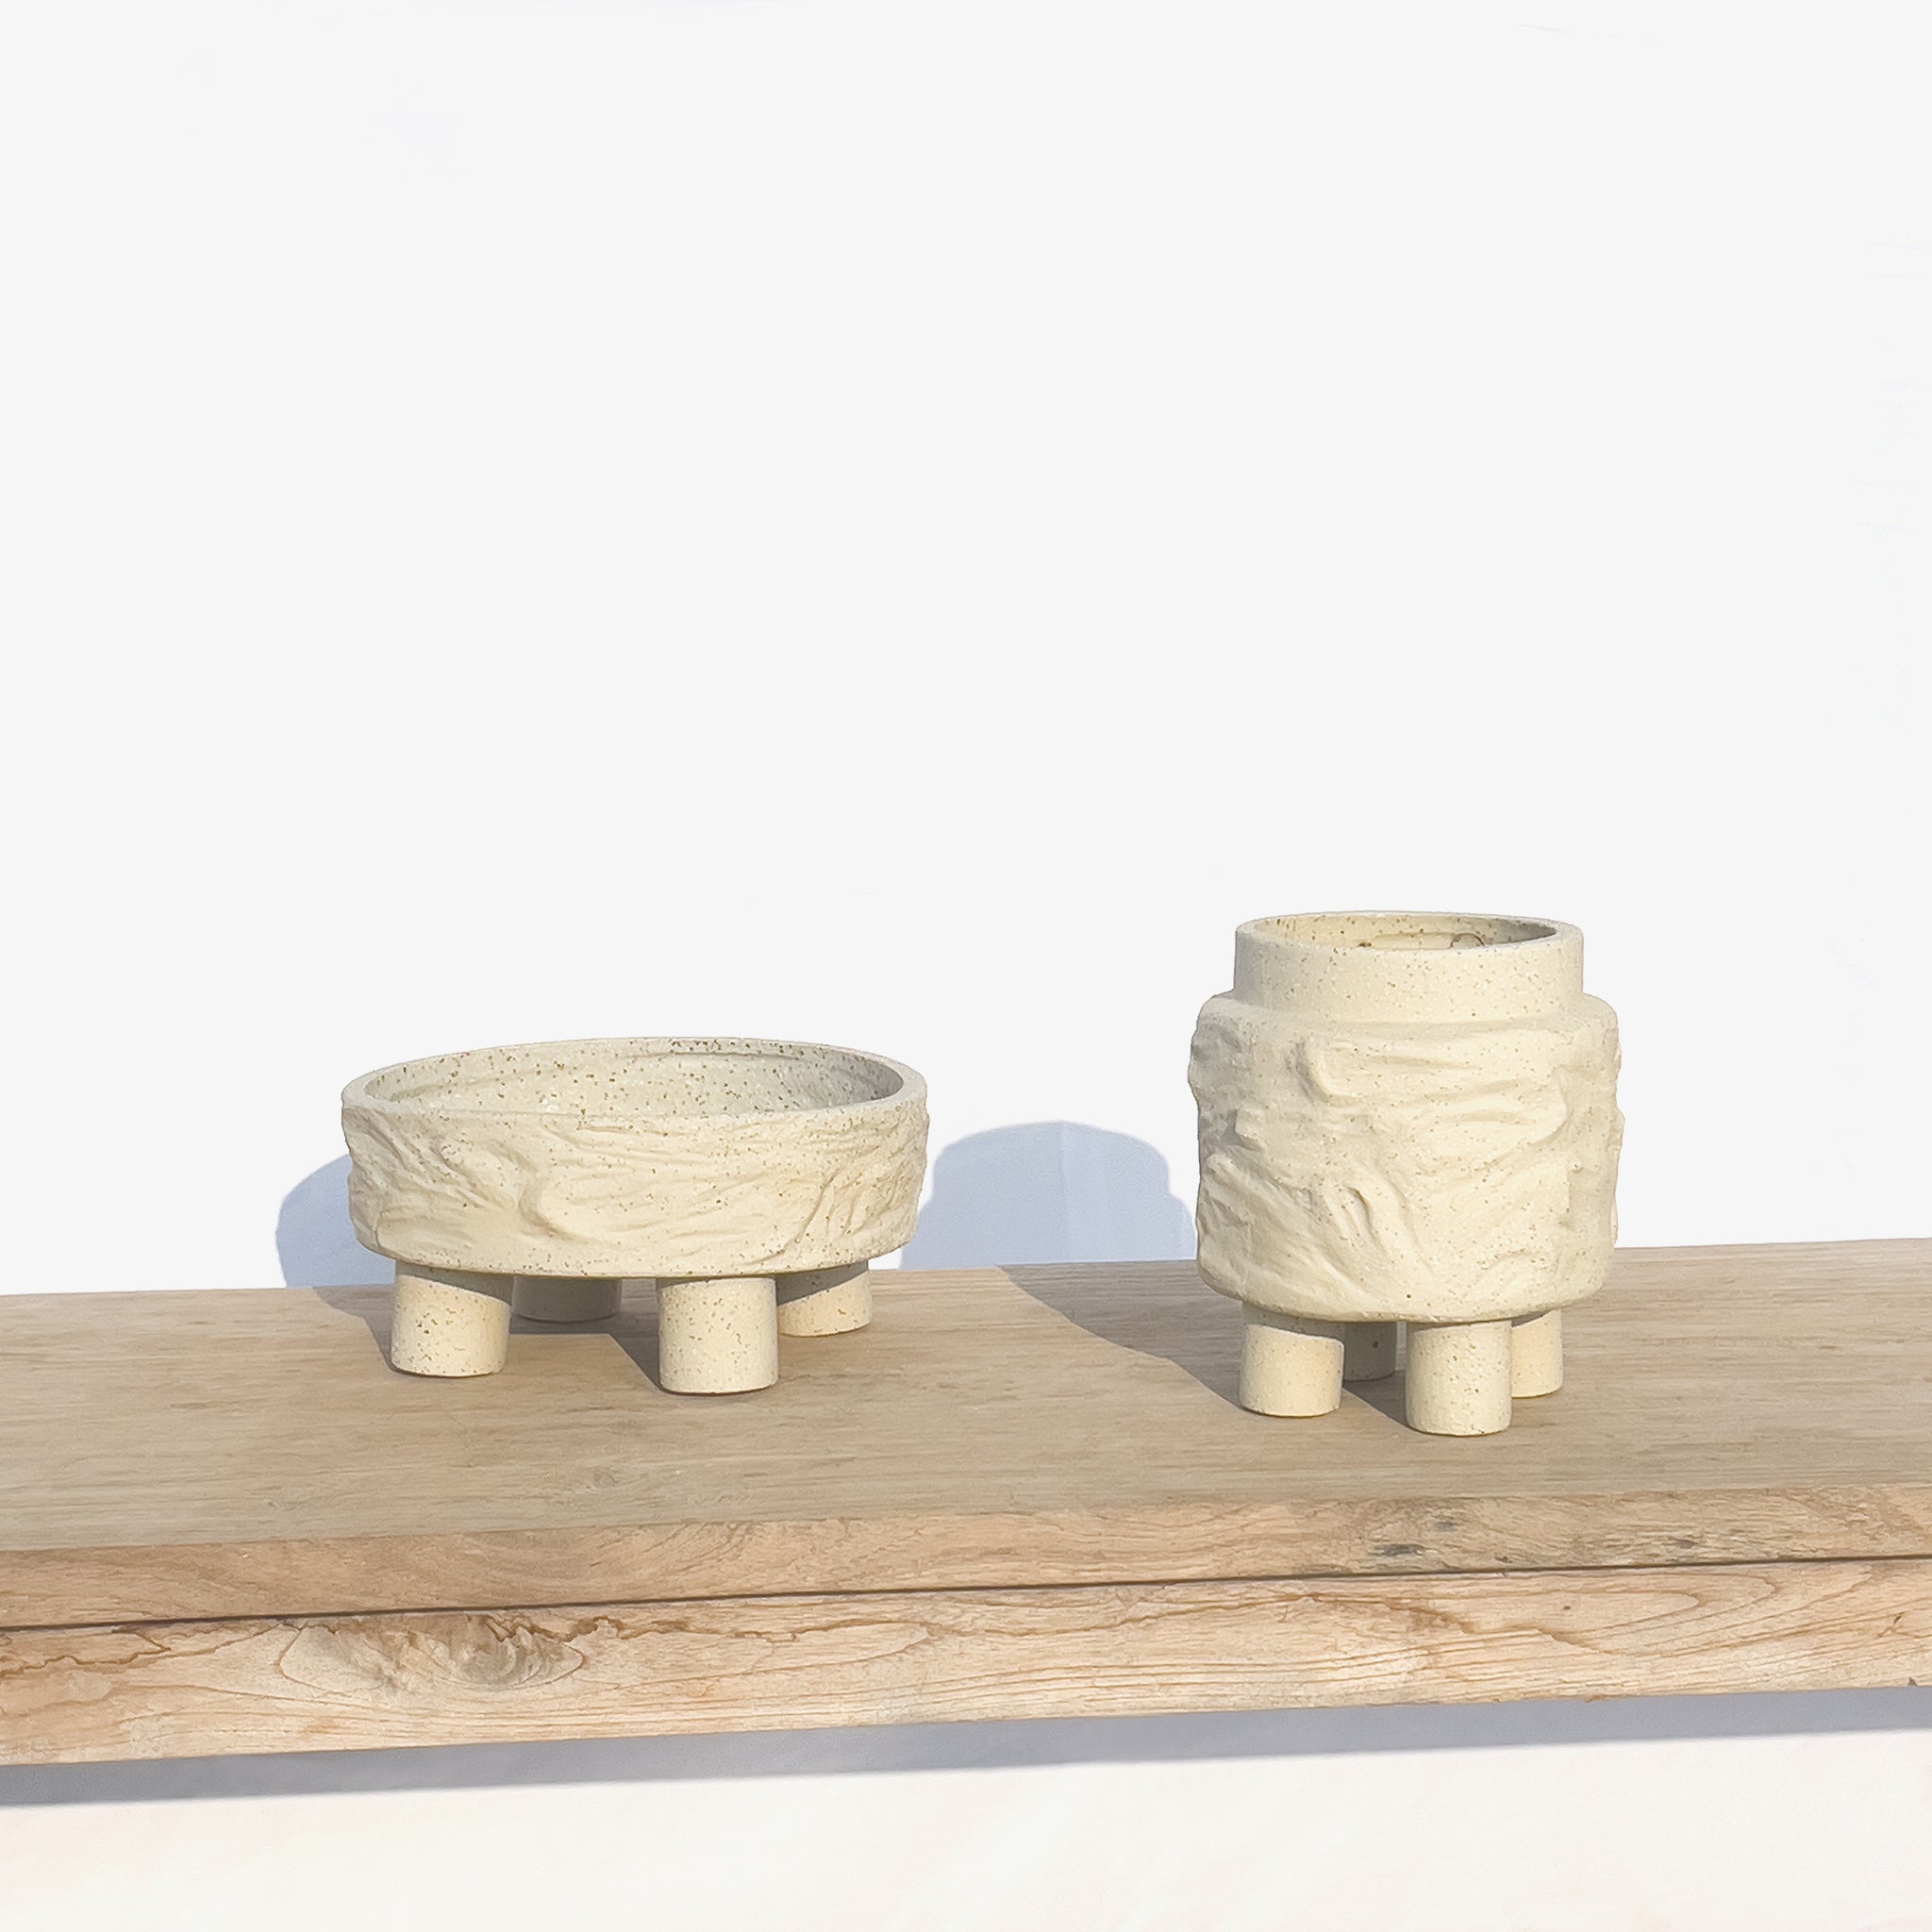 紋理陶瓷花盆 | Textured ceramic planter